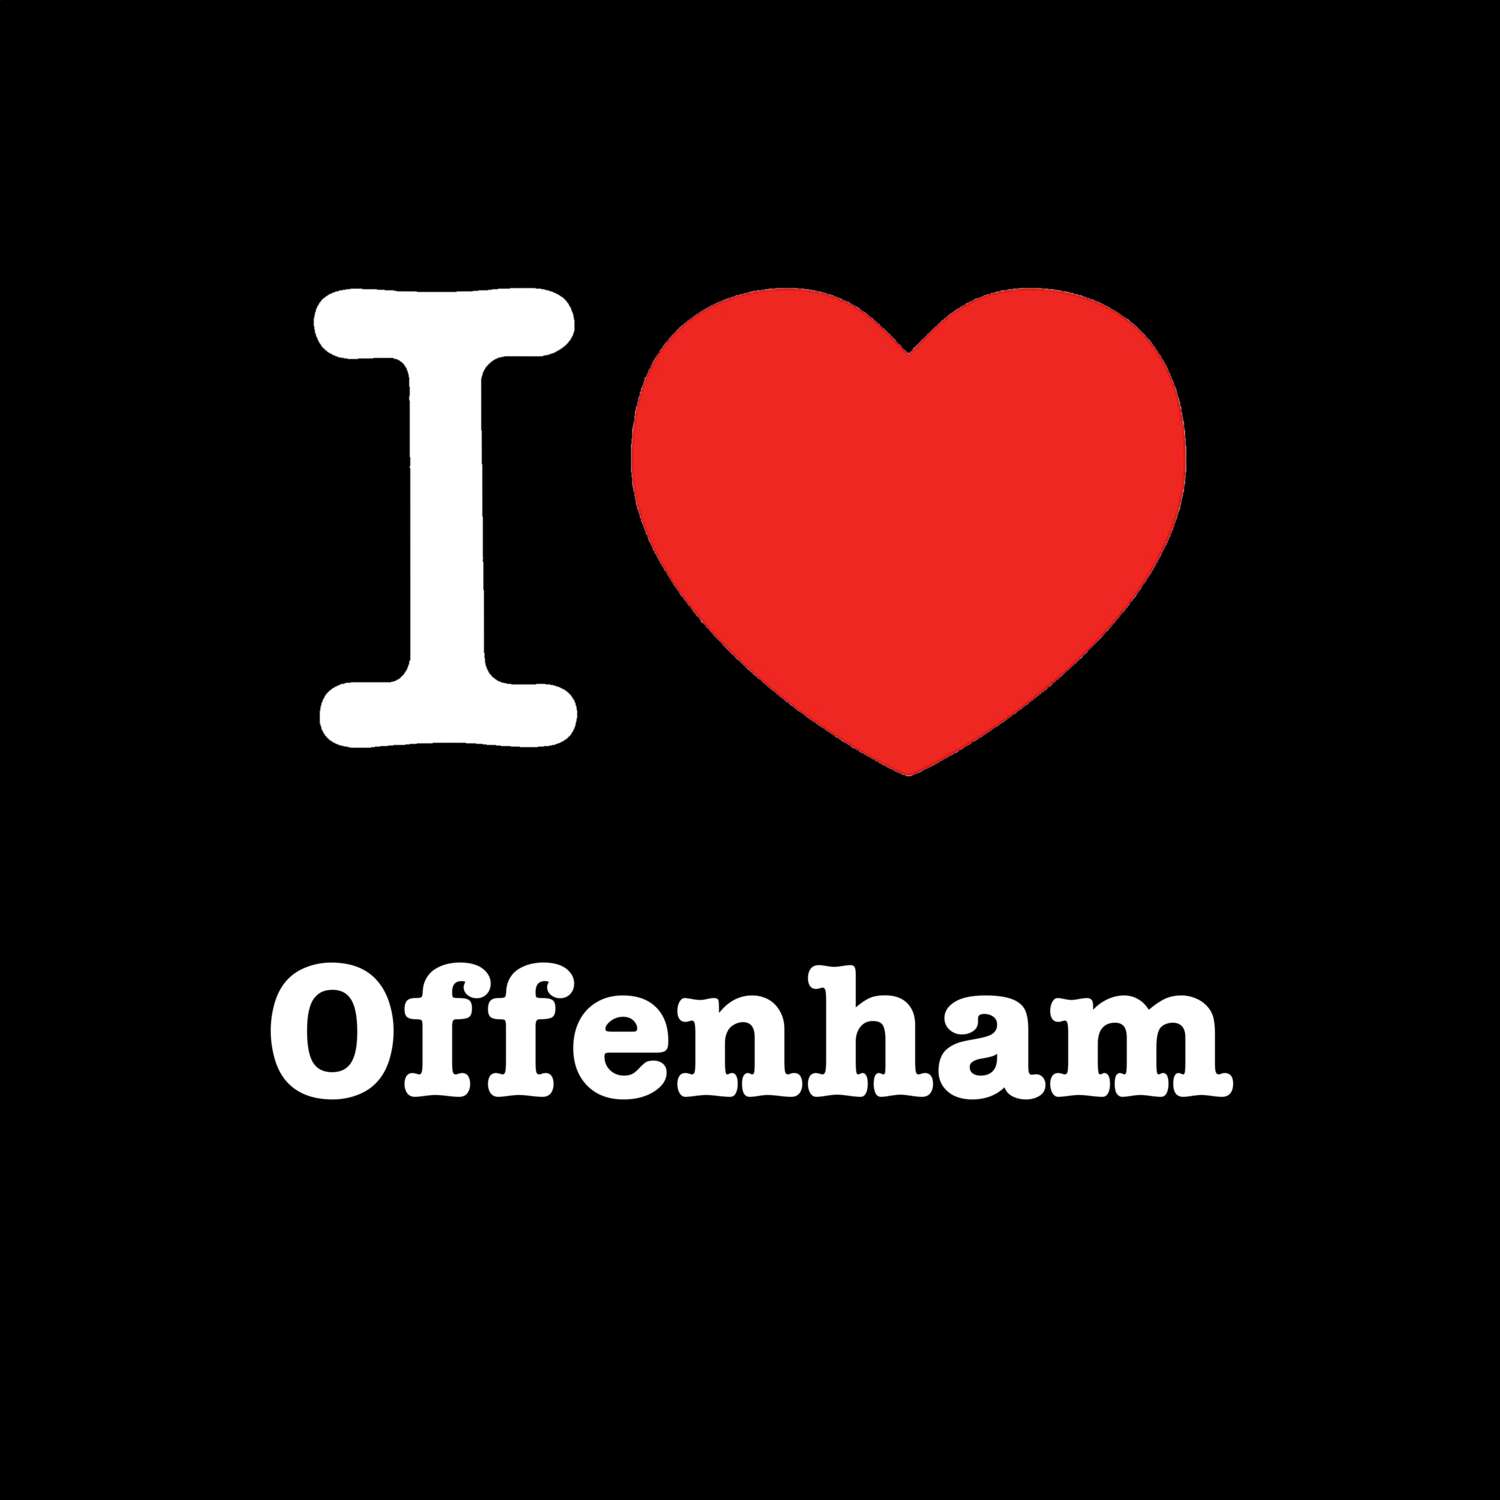 Offenham T-Shirt »I love«